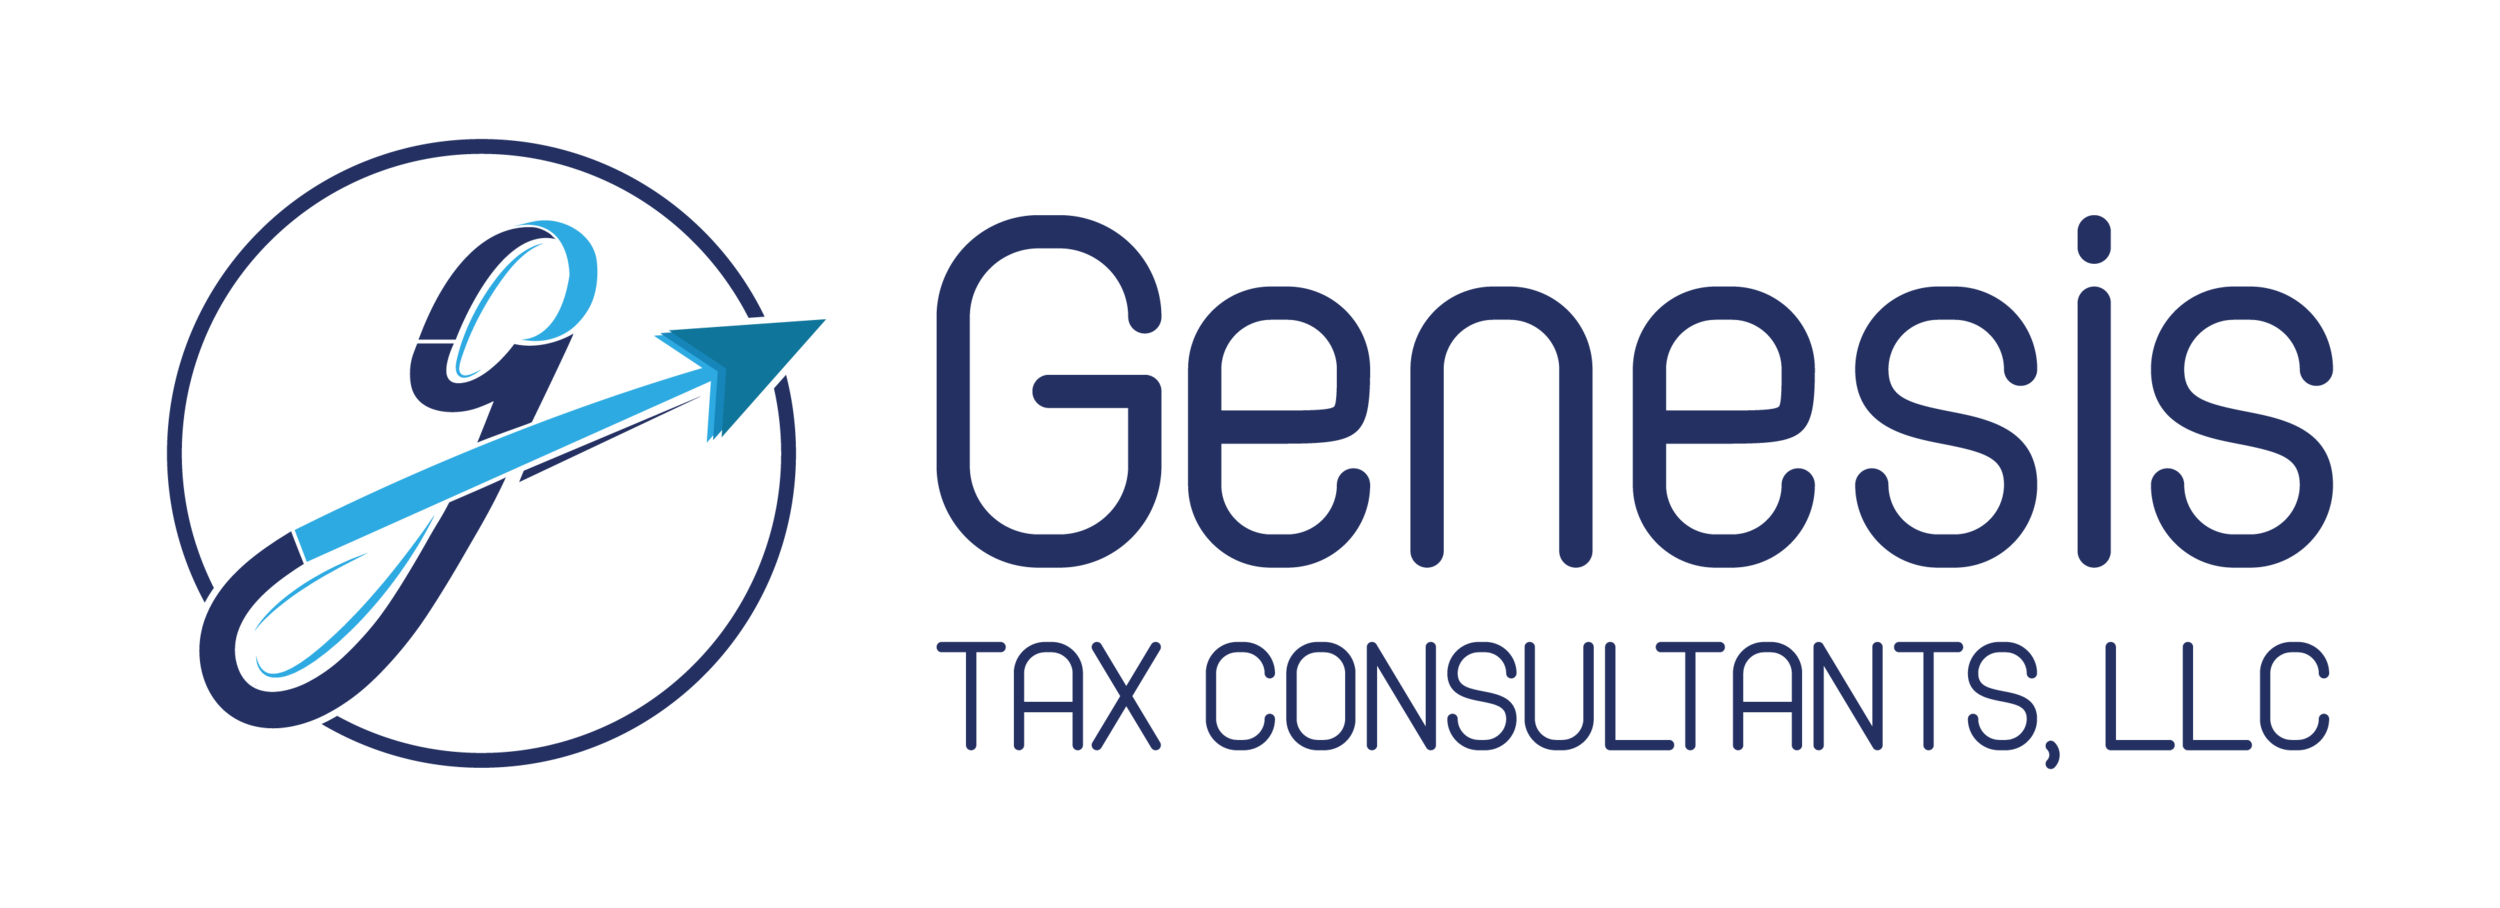 Genesis Tax Consultants, LLC